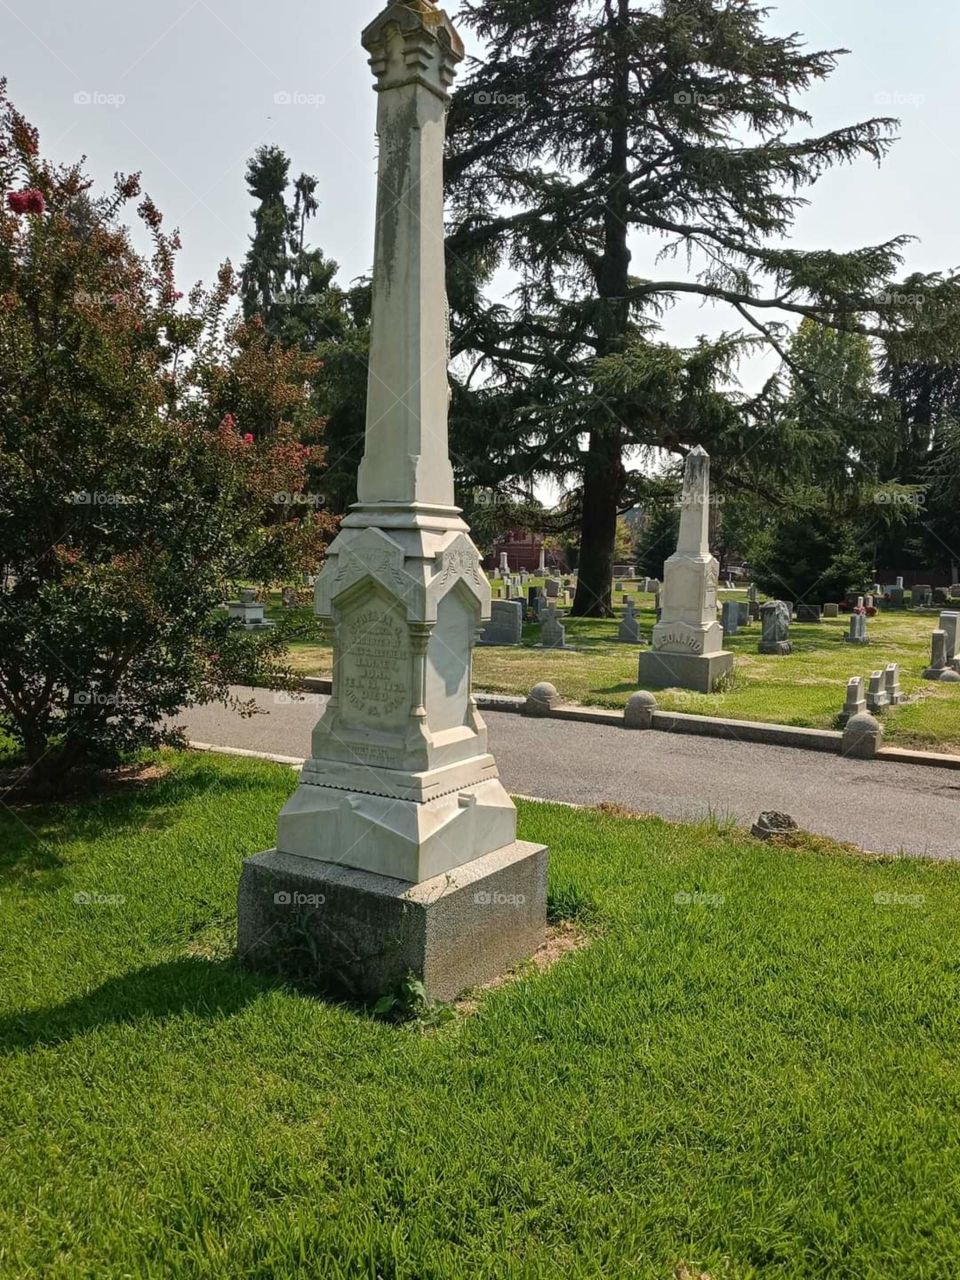 mission Santa Clara cemetery